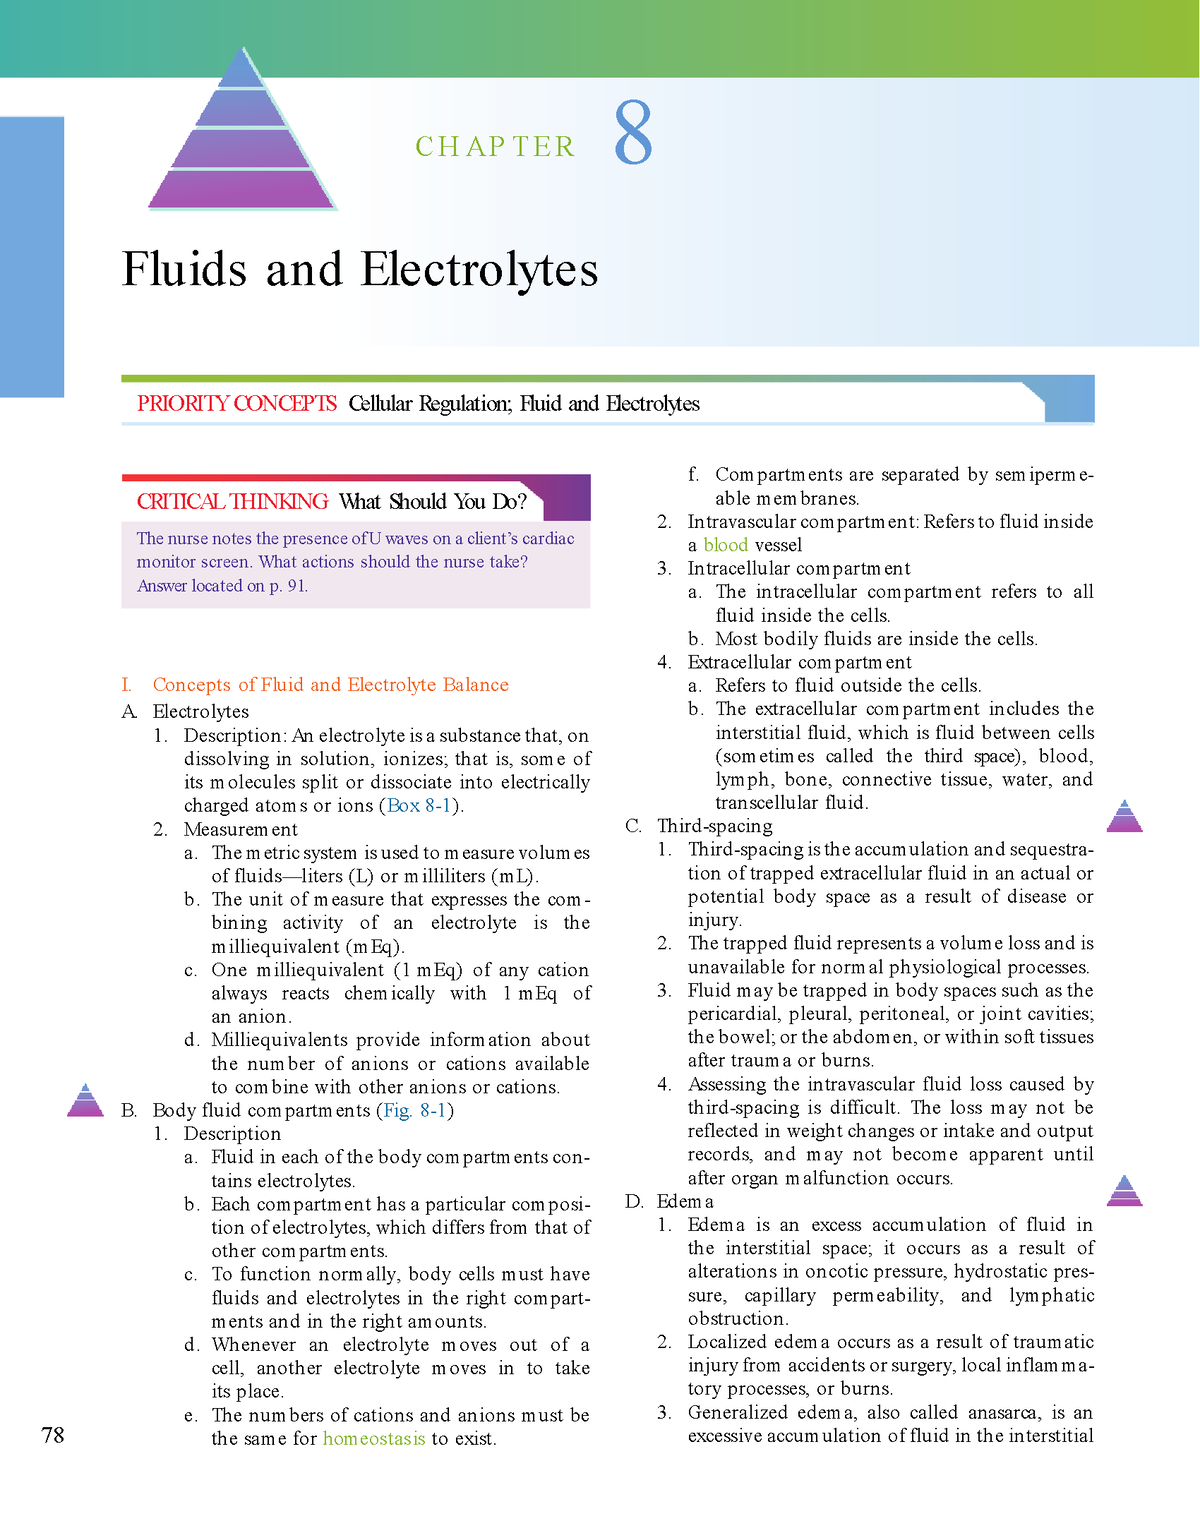 Saunders Fluids and Electrolytes RN Nclex Ch. 8 - C H A P T E R 8 ...